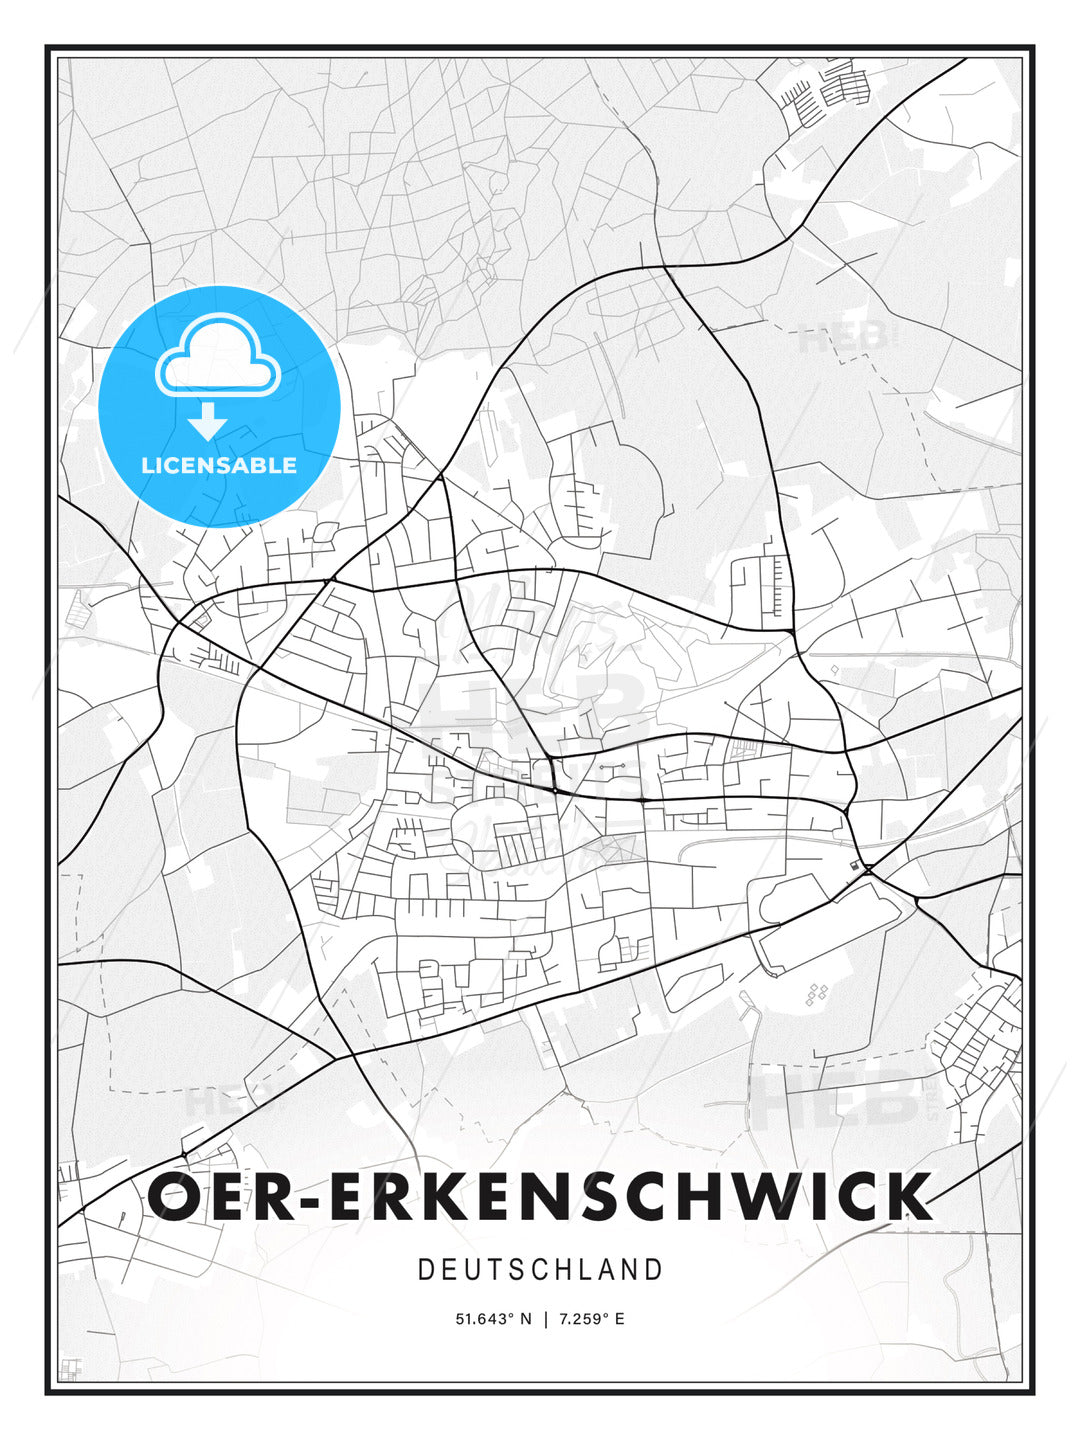 Oer-Erkenschwick, Germany, Modern Print Template in Various Formats - HEBSTREITS Sketches